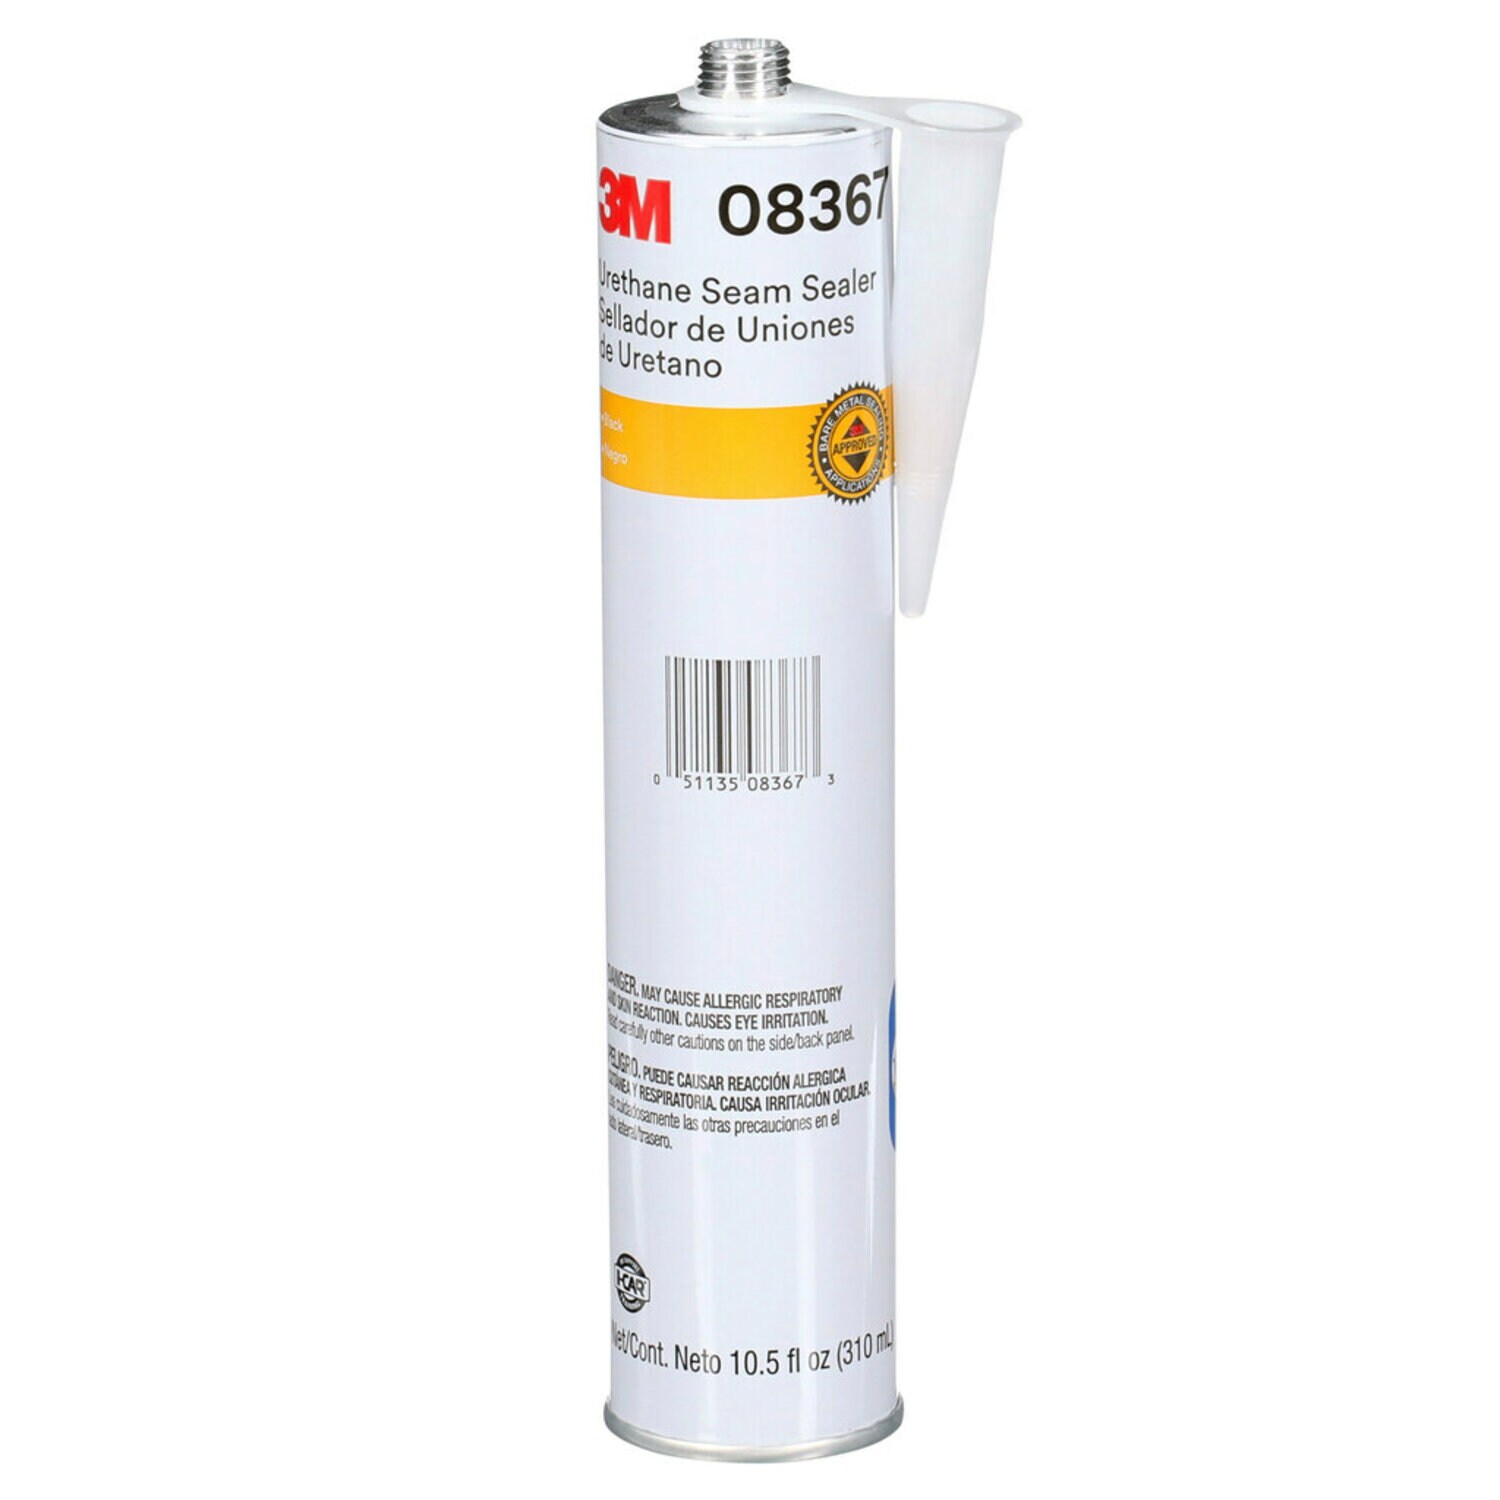 505 Spray & Fix Temporary Fabric Adhesive- 11.7 oz.